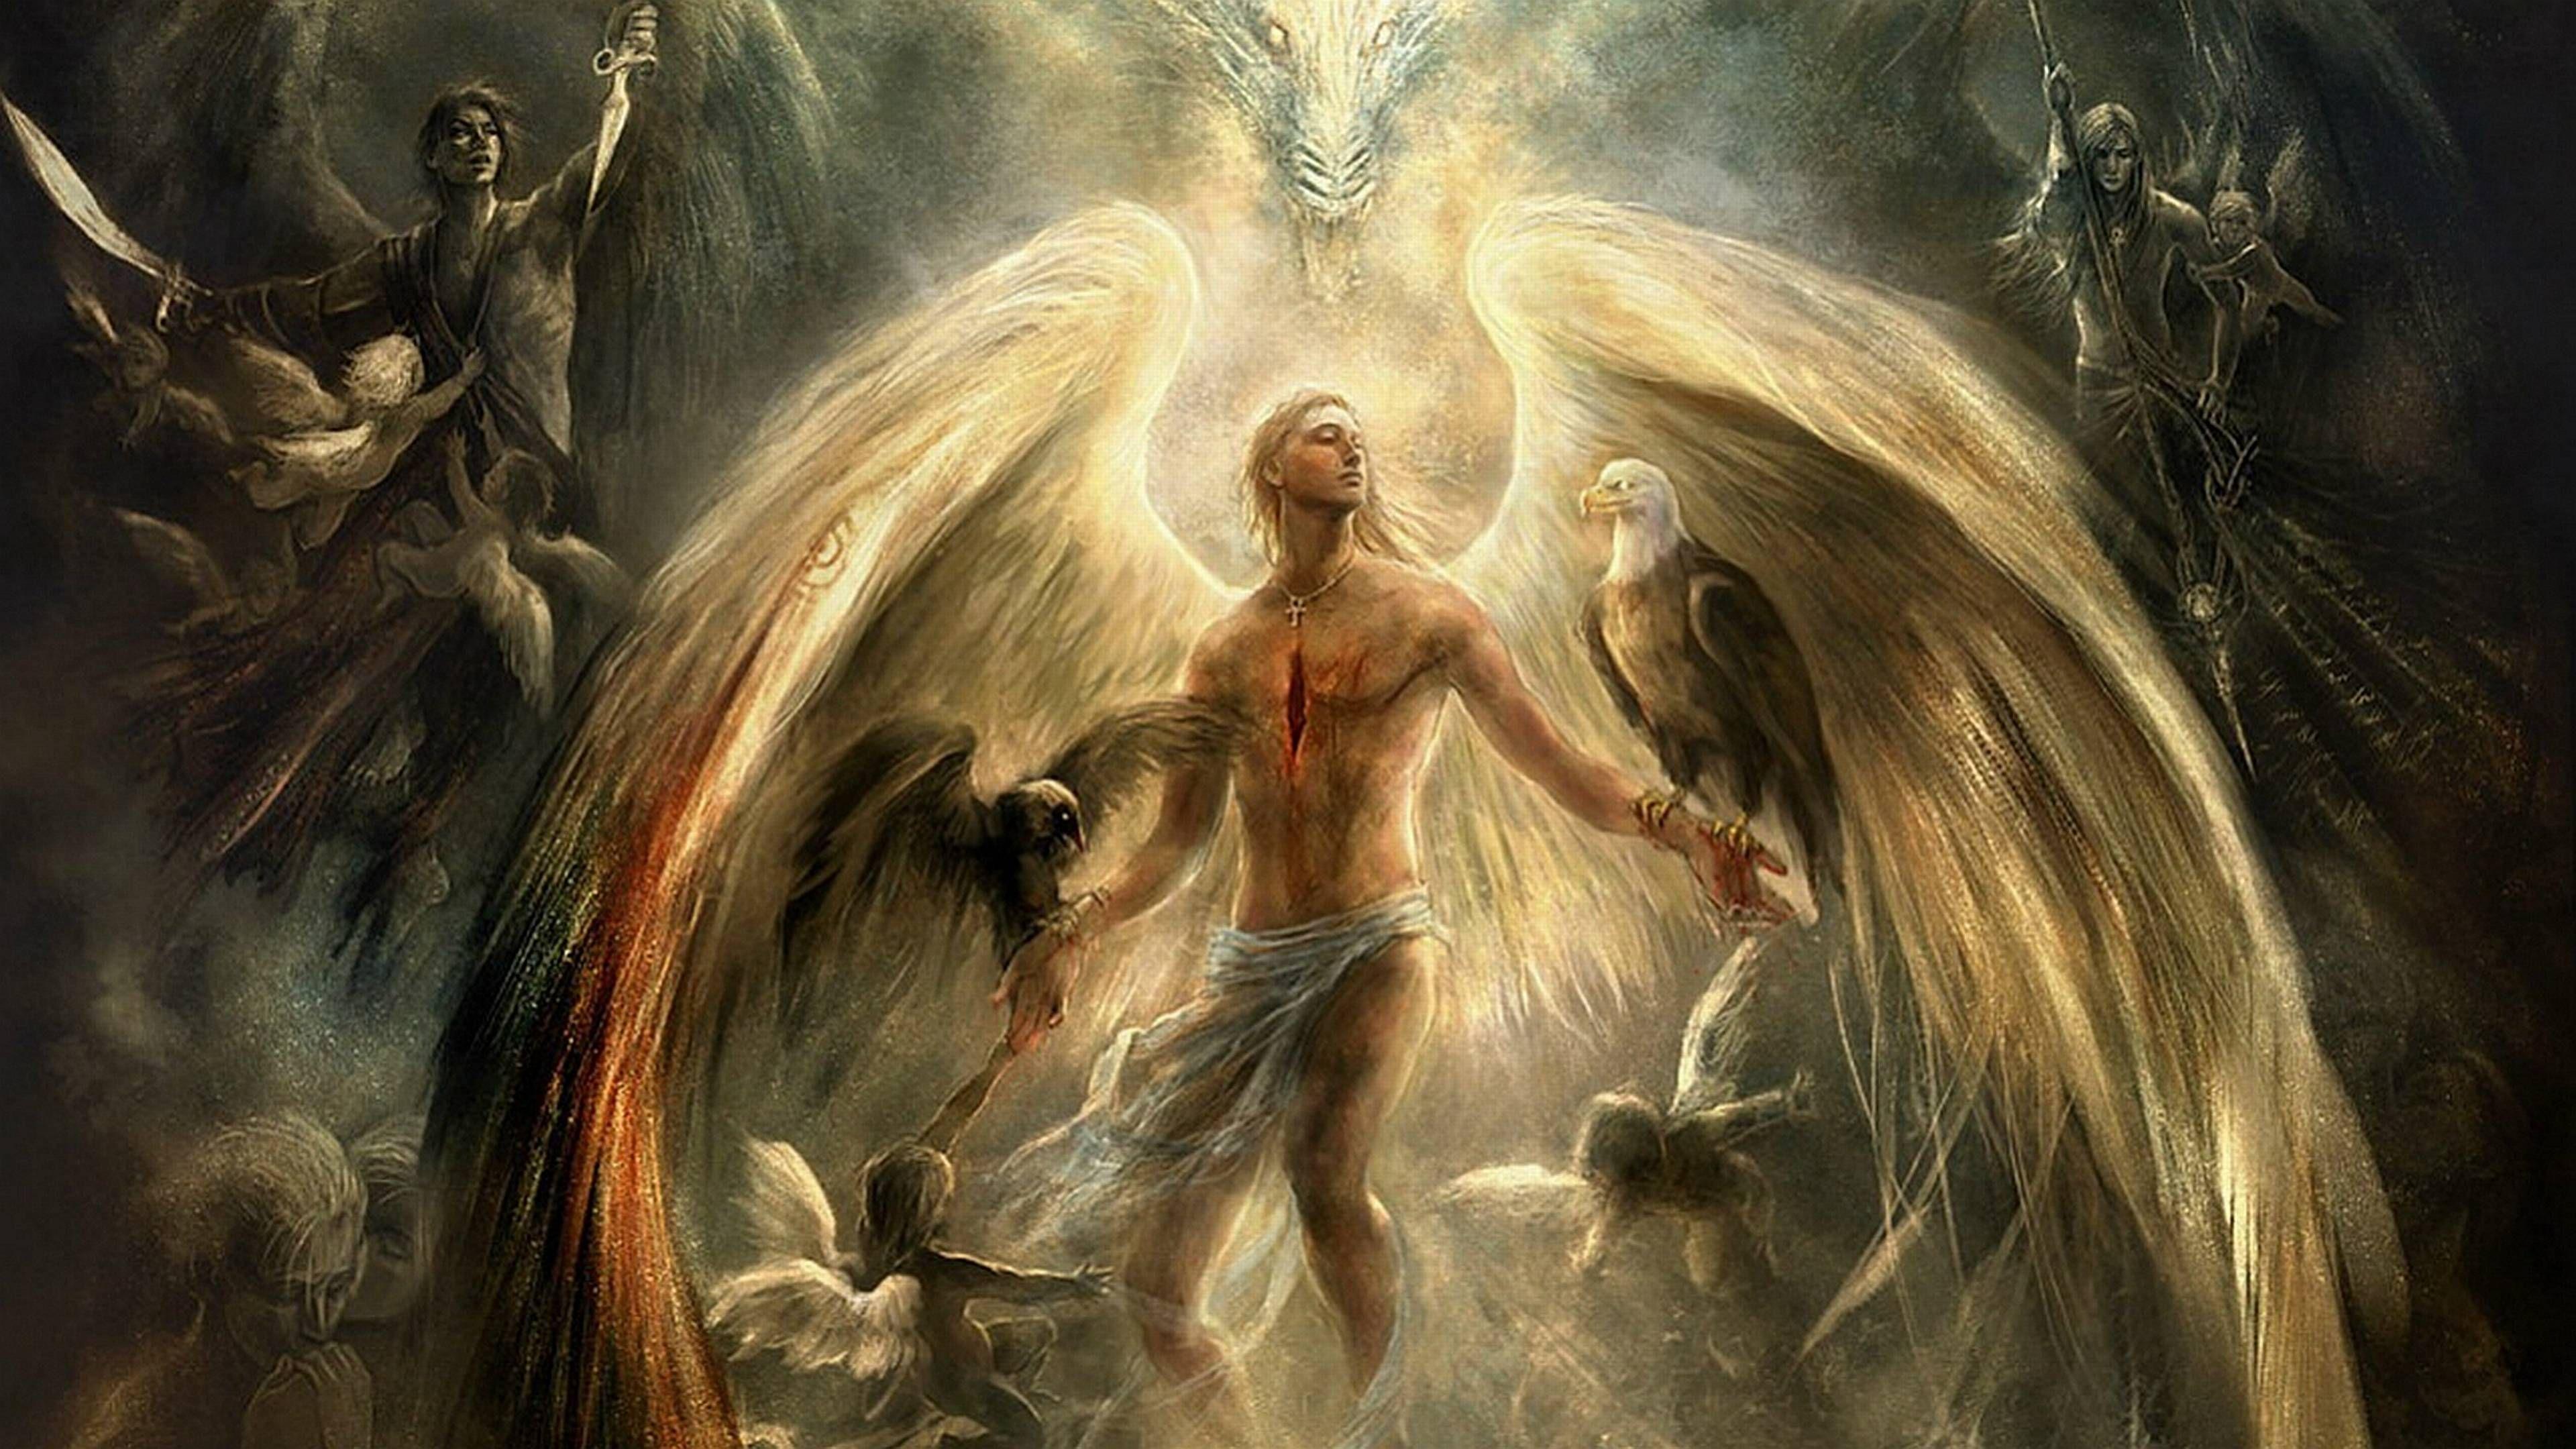 Wallpaper Of Angels. Angel wallpaper, Youtube art, Archangels